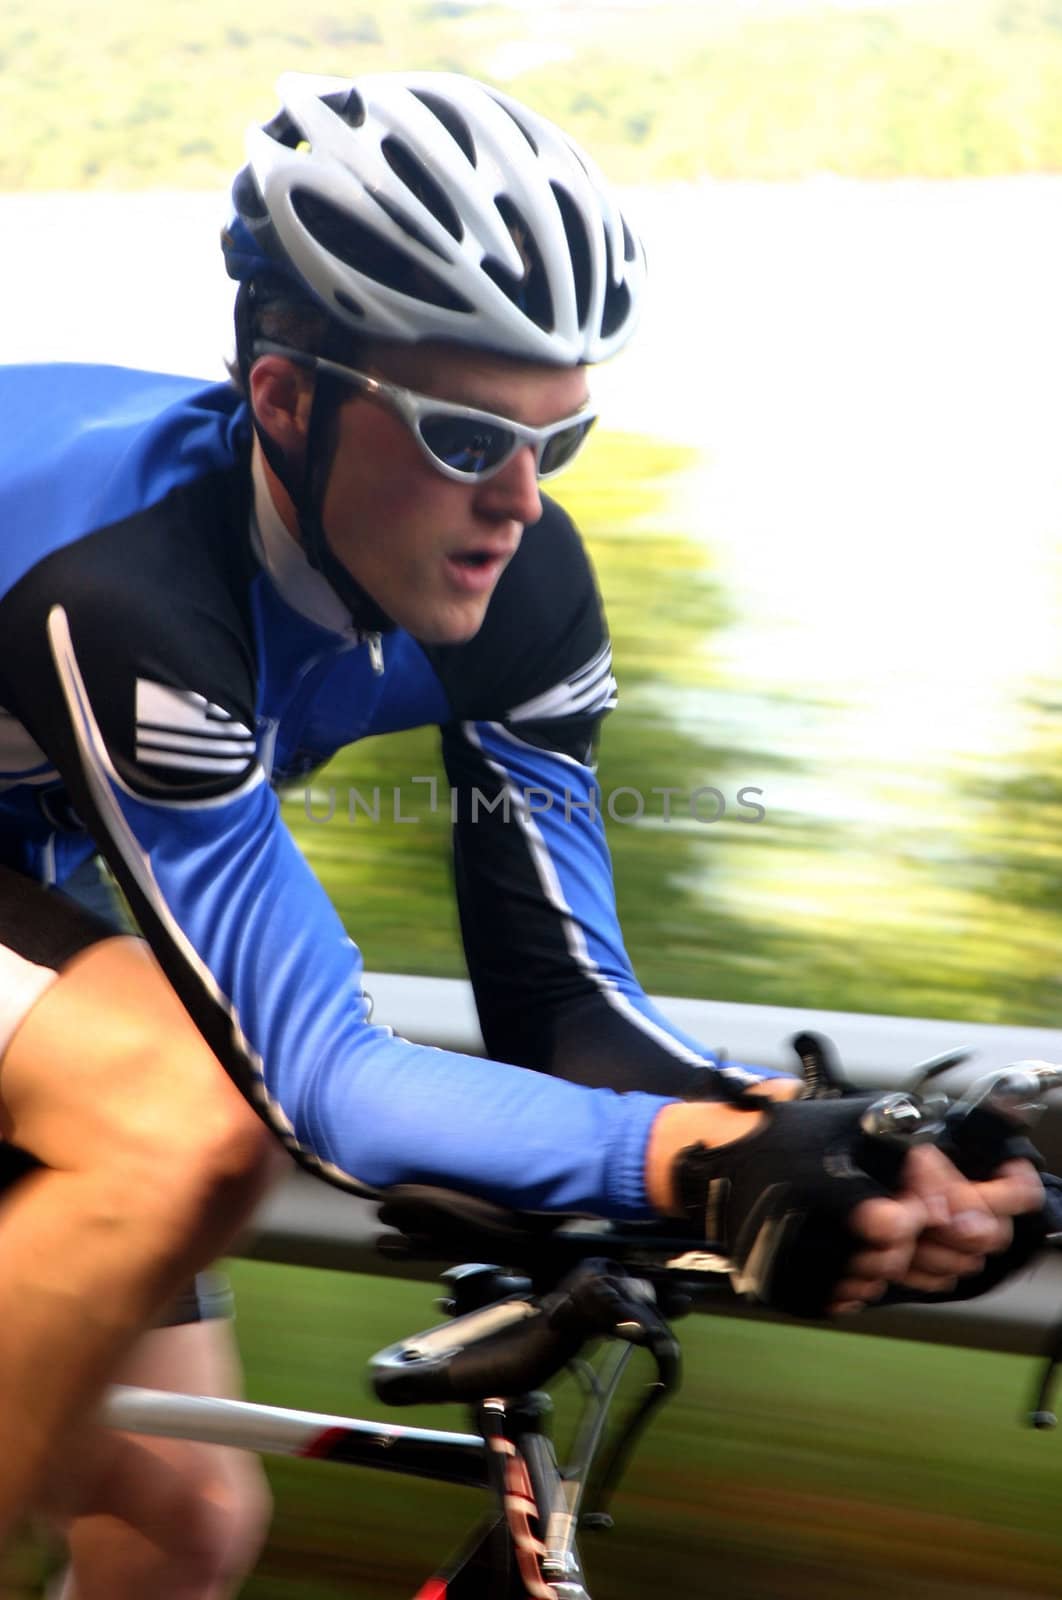 A fast image of a cyclist on a time trial/triathlon road bike